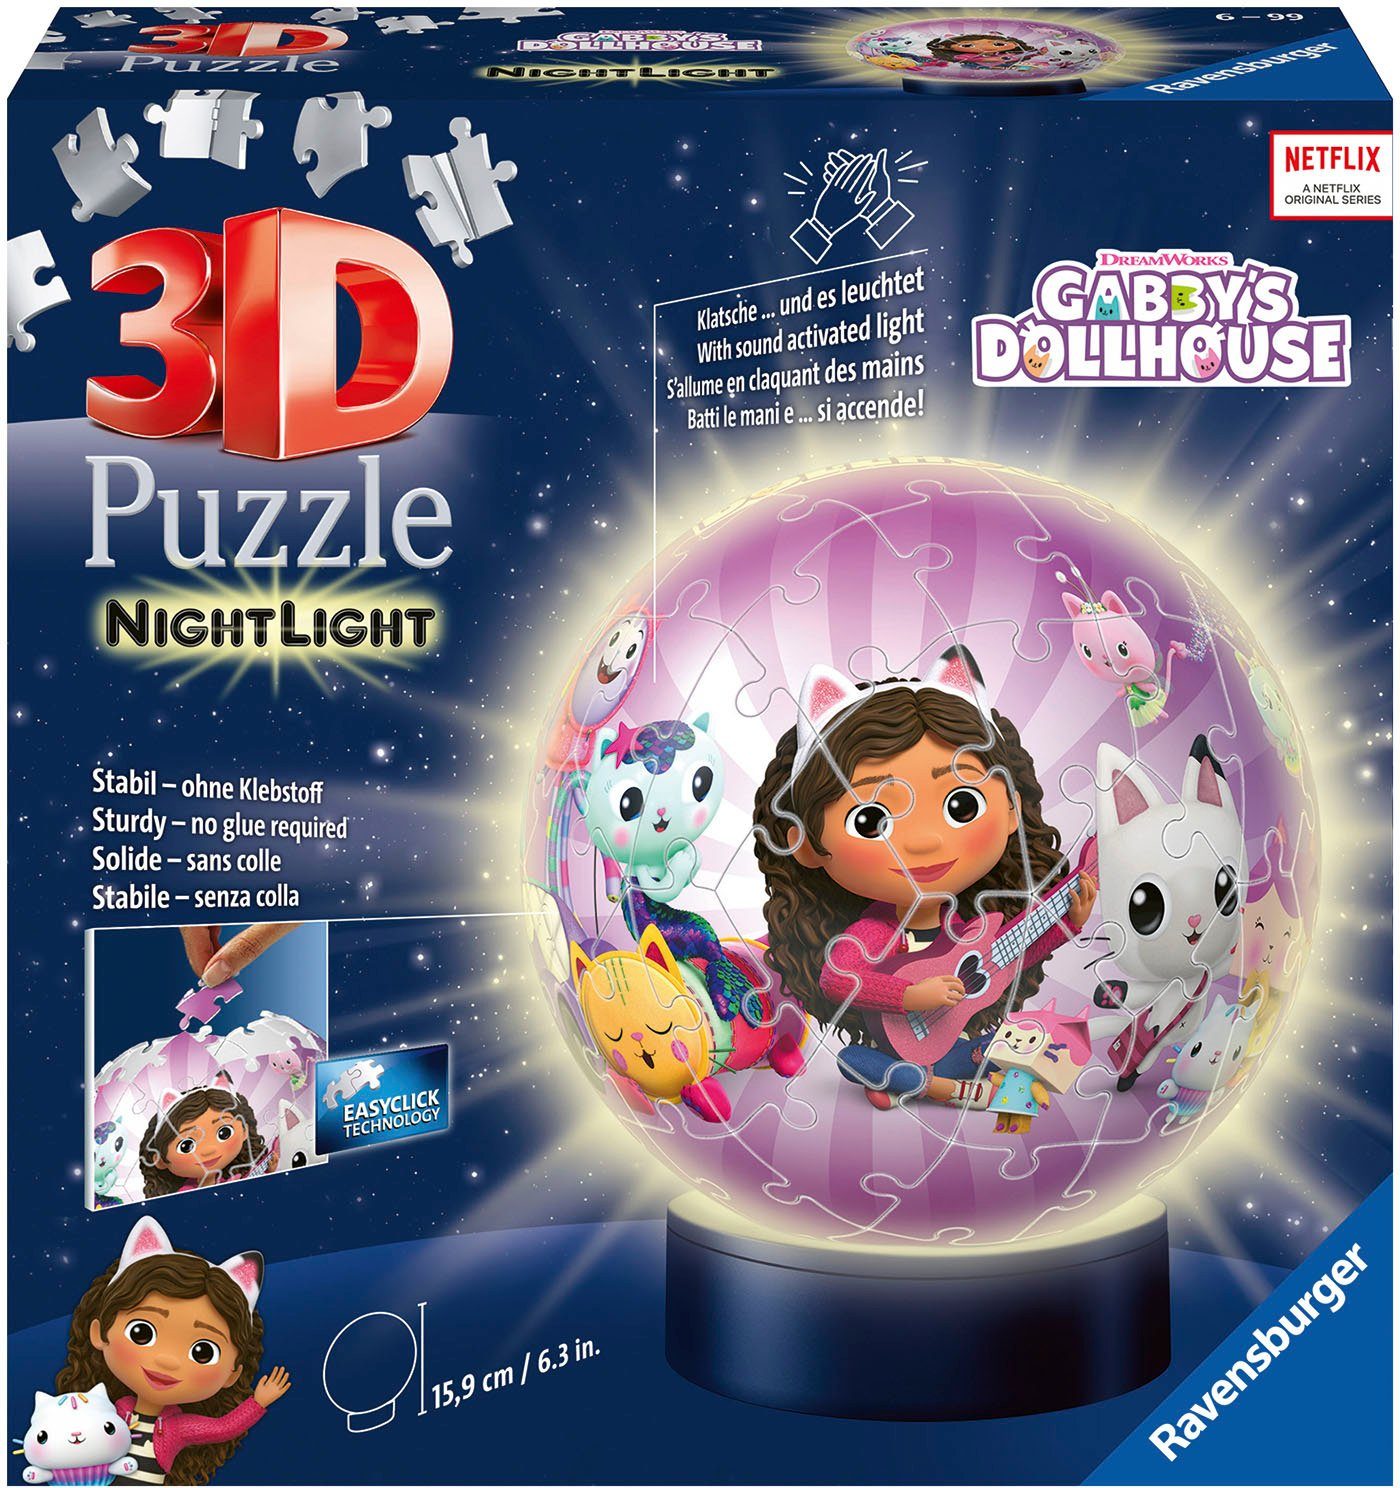 Ravensburger Puzzleball Nachtlicht Gabby's Dollhouse, 72 Puzzleteile, Made in Europe